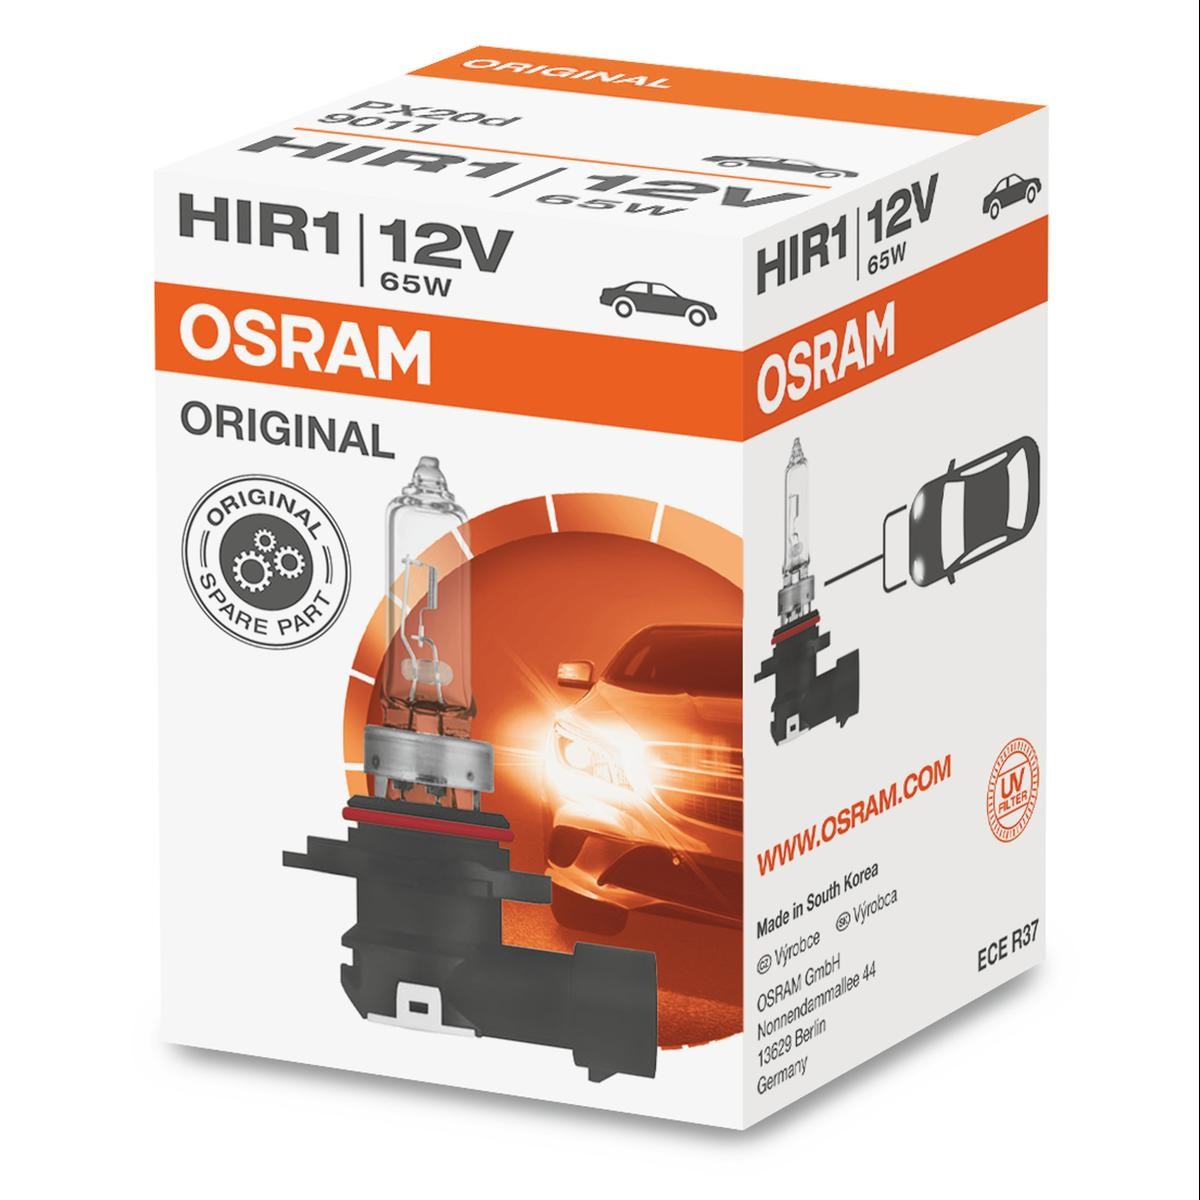 HIR1 OSRAM ORIGINAL LINE Socket Bulb 12V 65W PX22d, Halogen, ORIGINAL High beam bulb 9011 buy